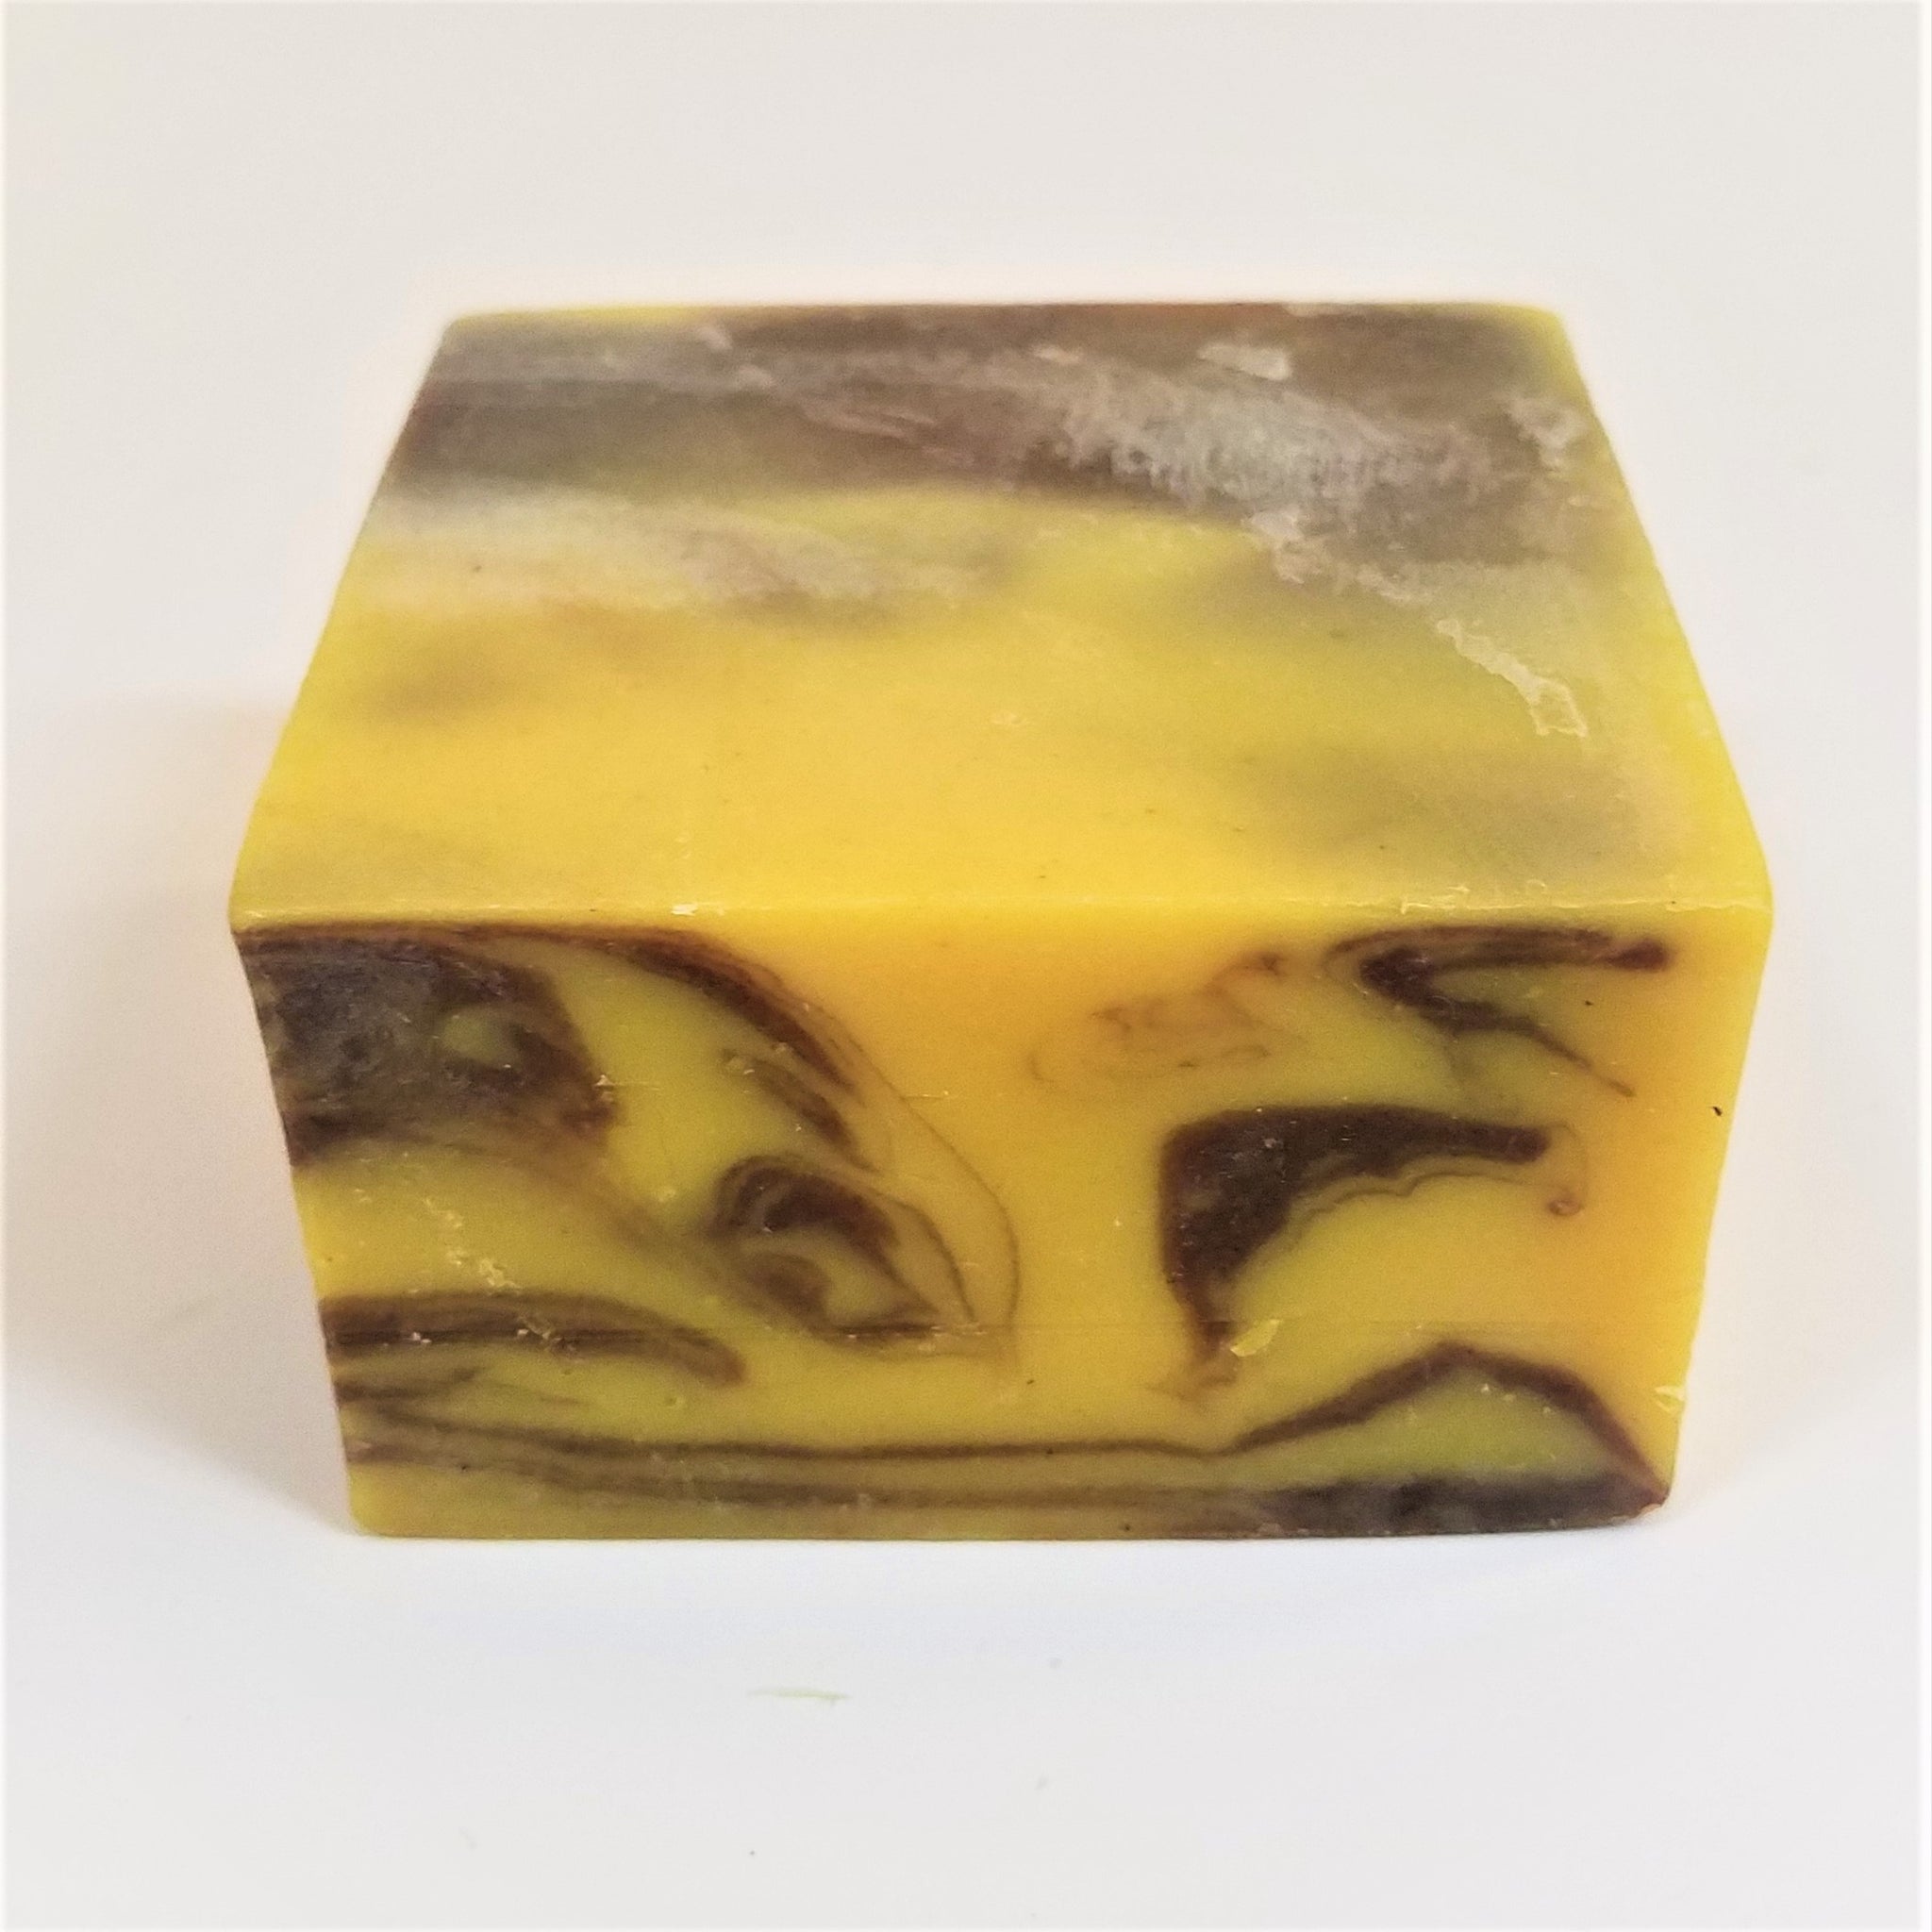 Organic Rose Soap – SallyeAnder